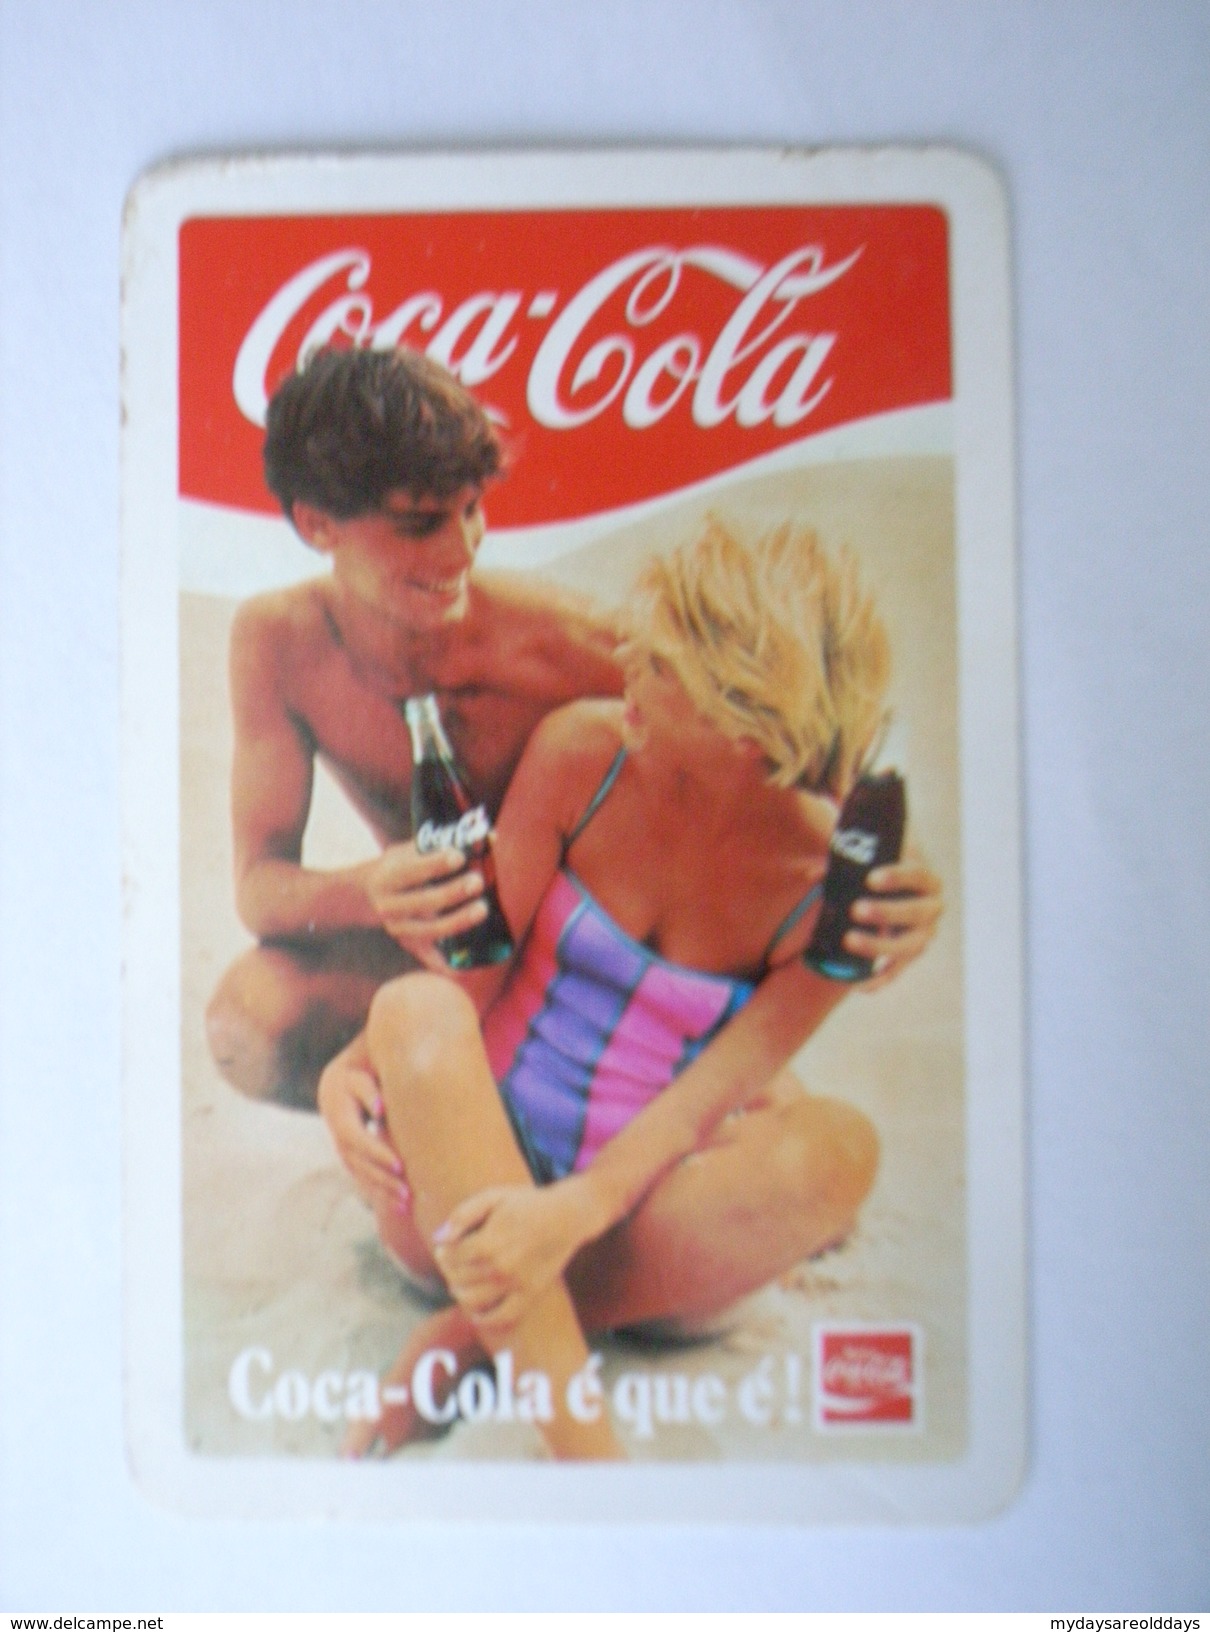 1 Calendar - Portugal Bebida Boisson Drink Bevanda Getrank Juice Coca Cola Pepsi (d92) - Petit Format : 1991-00